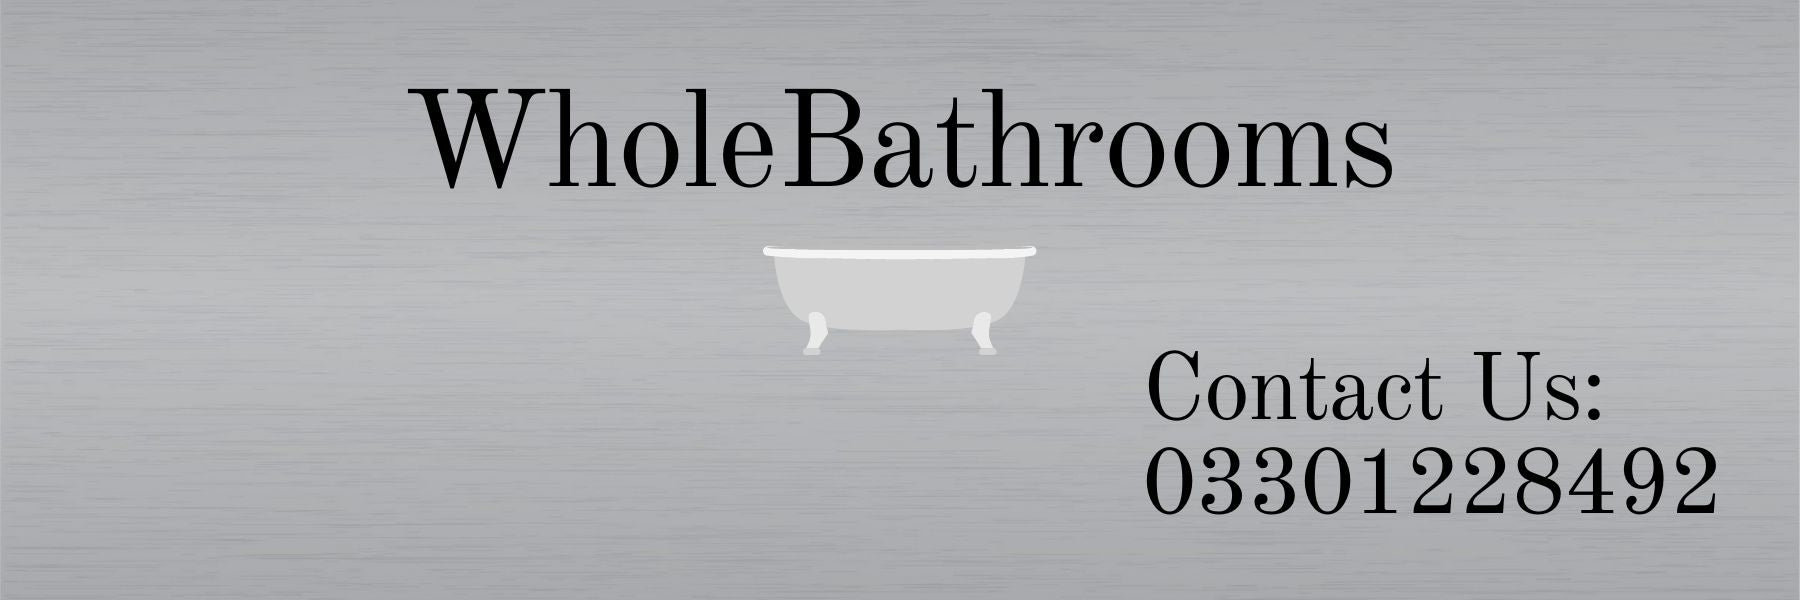 Whole Bathrooms